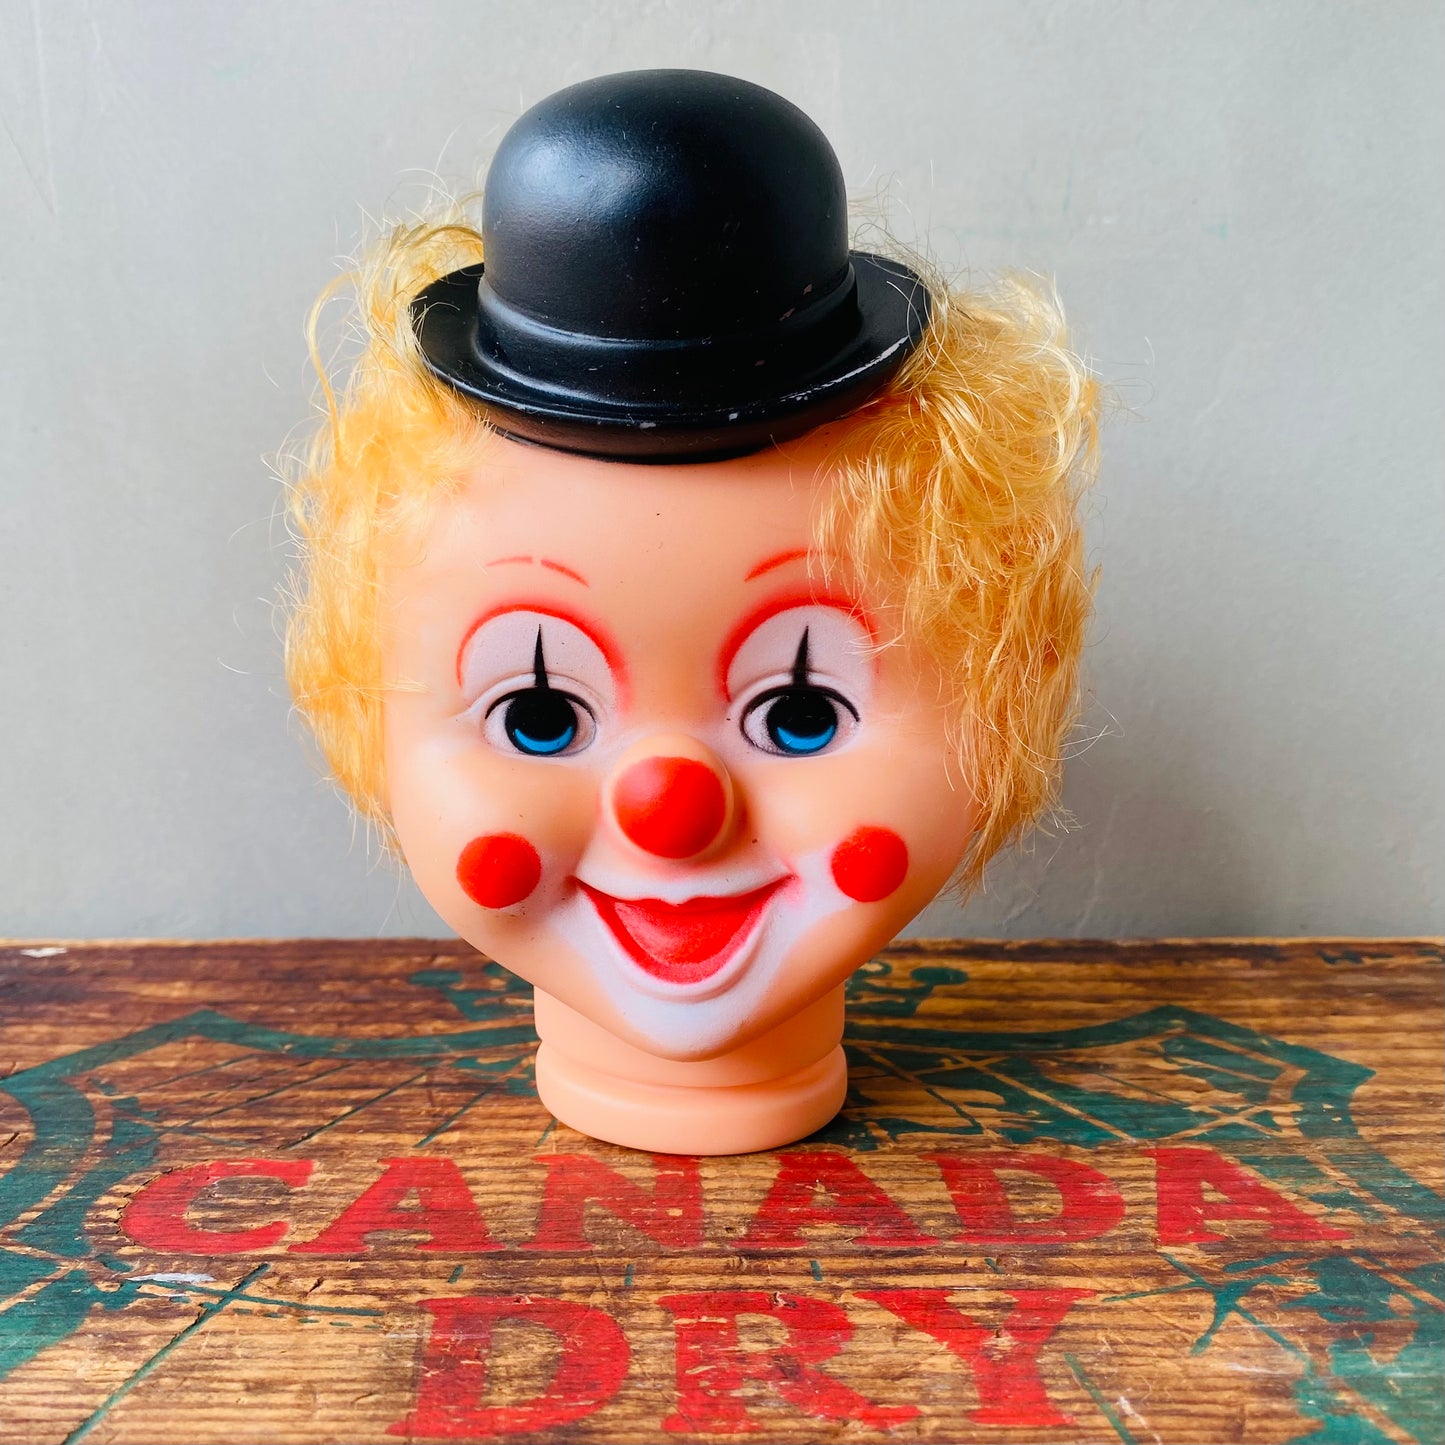 【USA vintage】clown doll head ピエロ ドールヘッド ゴールド